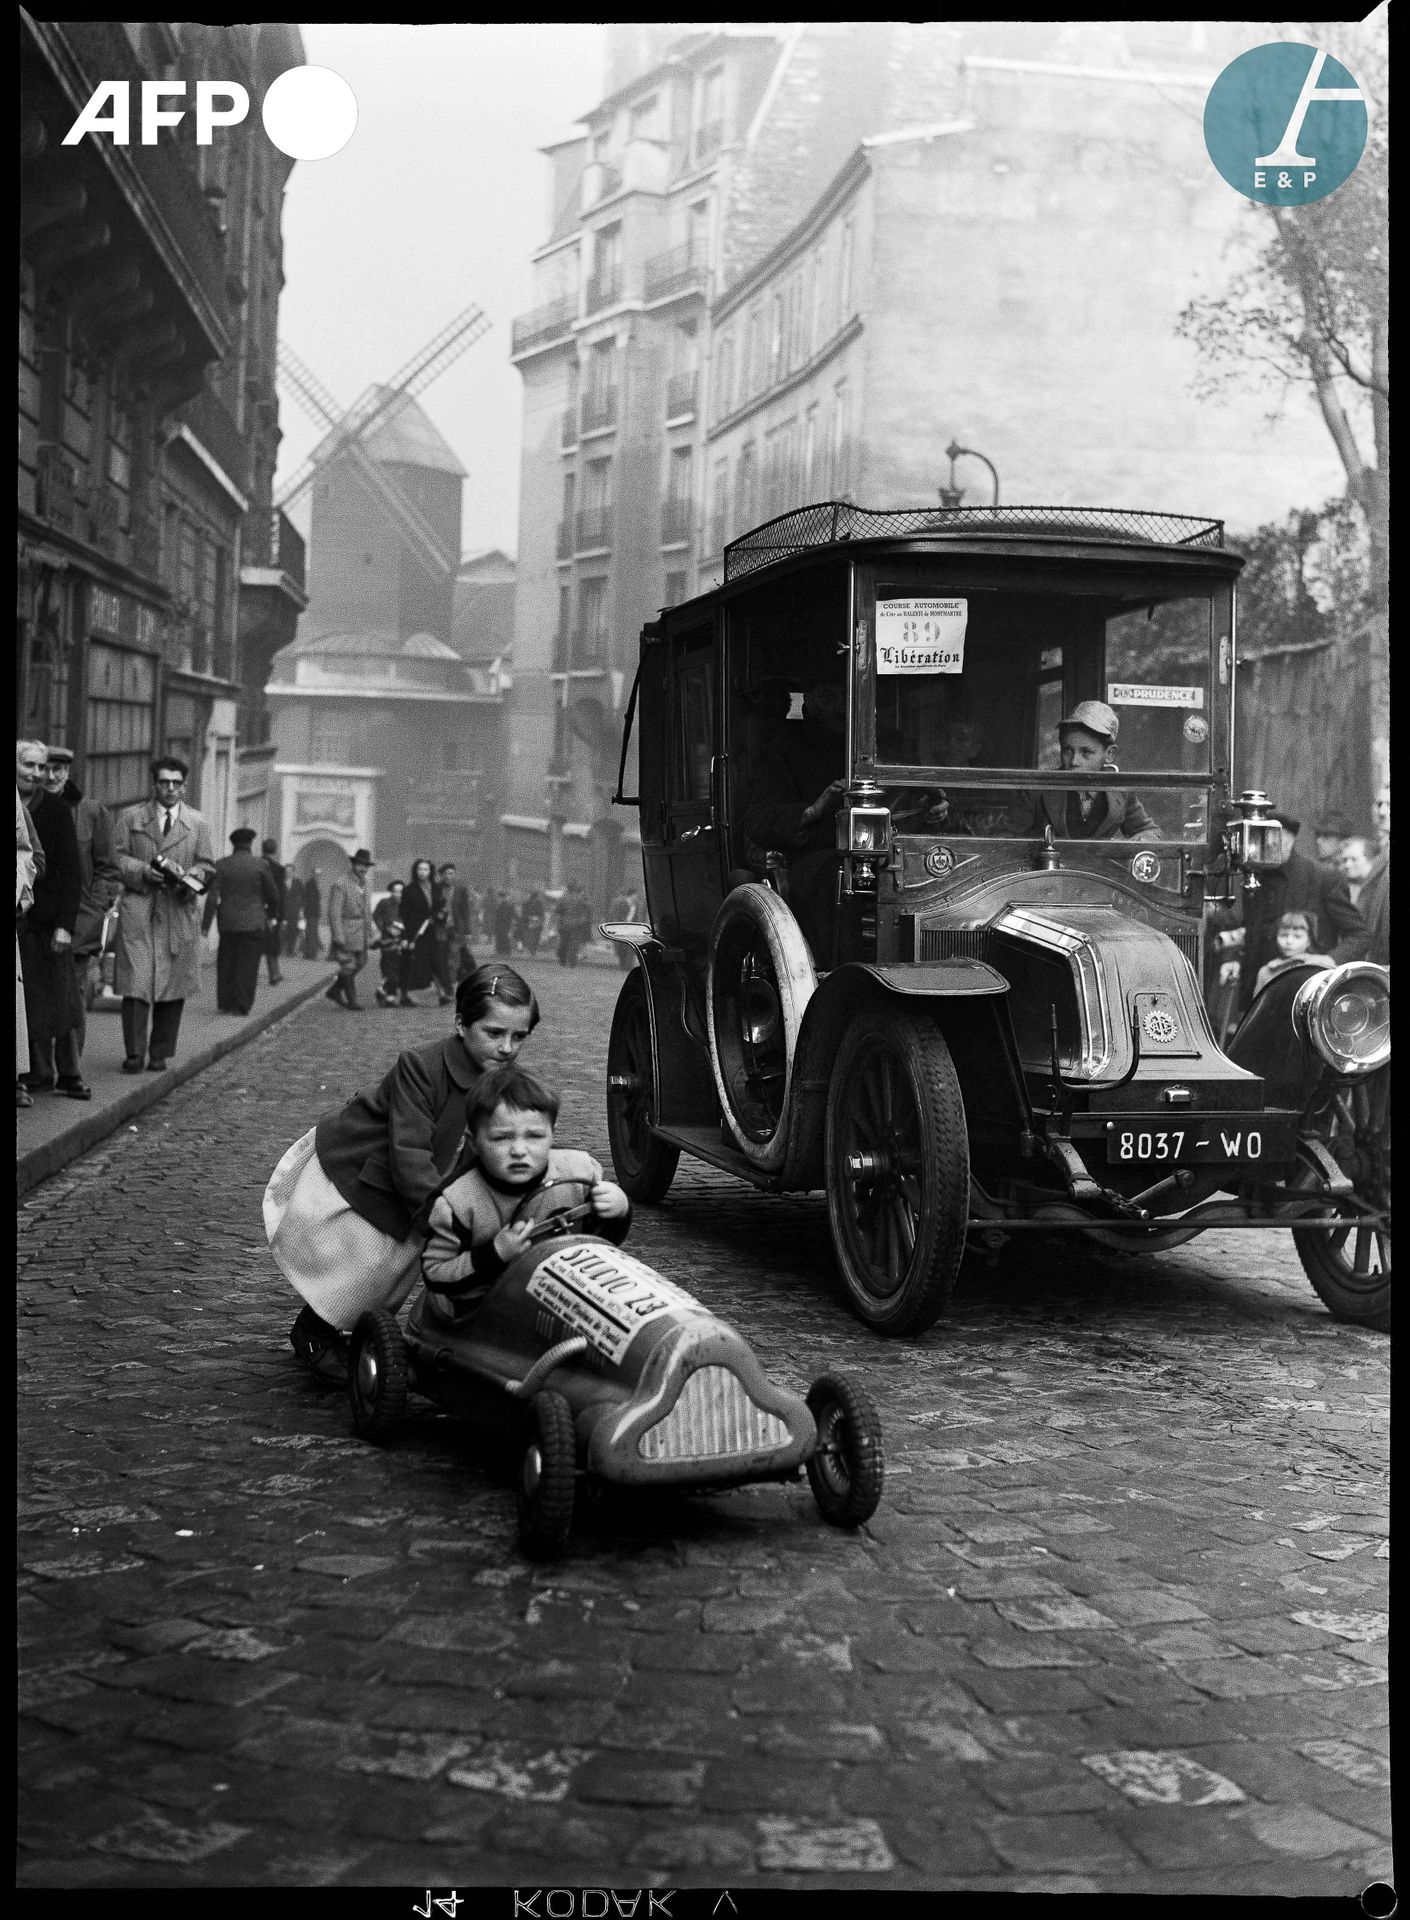 Null AFP

一个小男孩驾驶的脚踏车和一辆老式雷诺汽车参加蒙马特慢车赛。1930年代，巴黎。

两辆汽车，一辆是小男孩驾驶的脚踏车，另一辆是老式雷诺车，参&hellip;